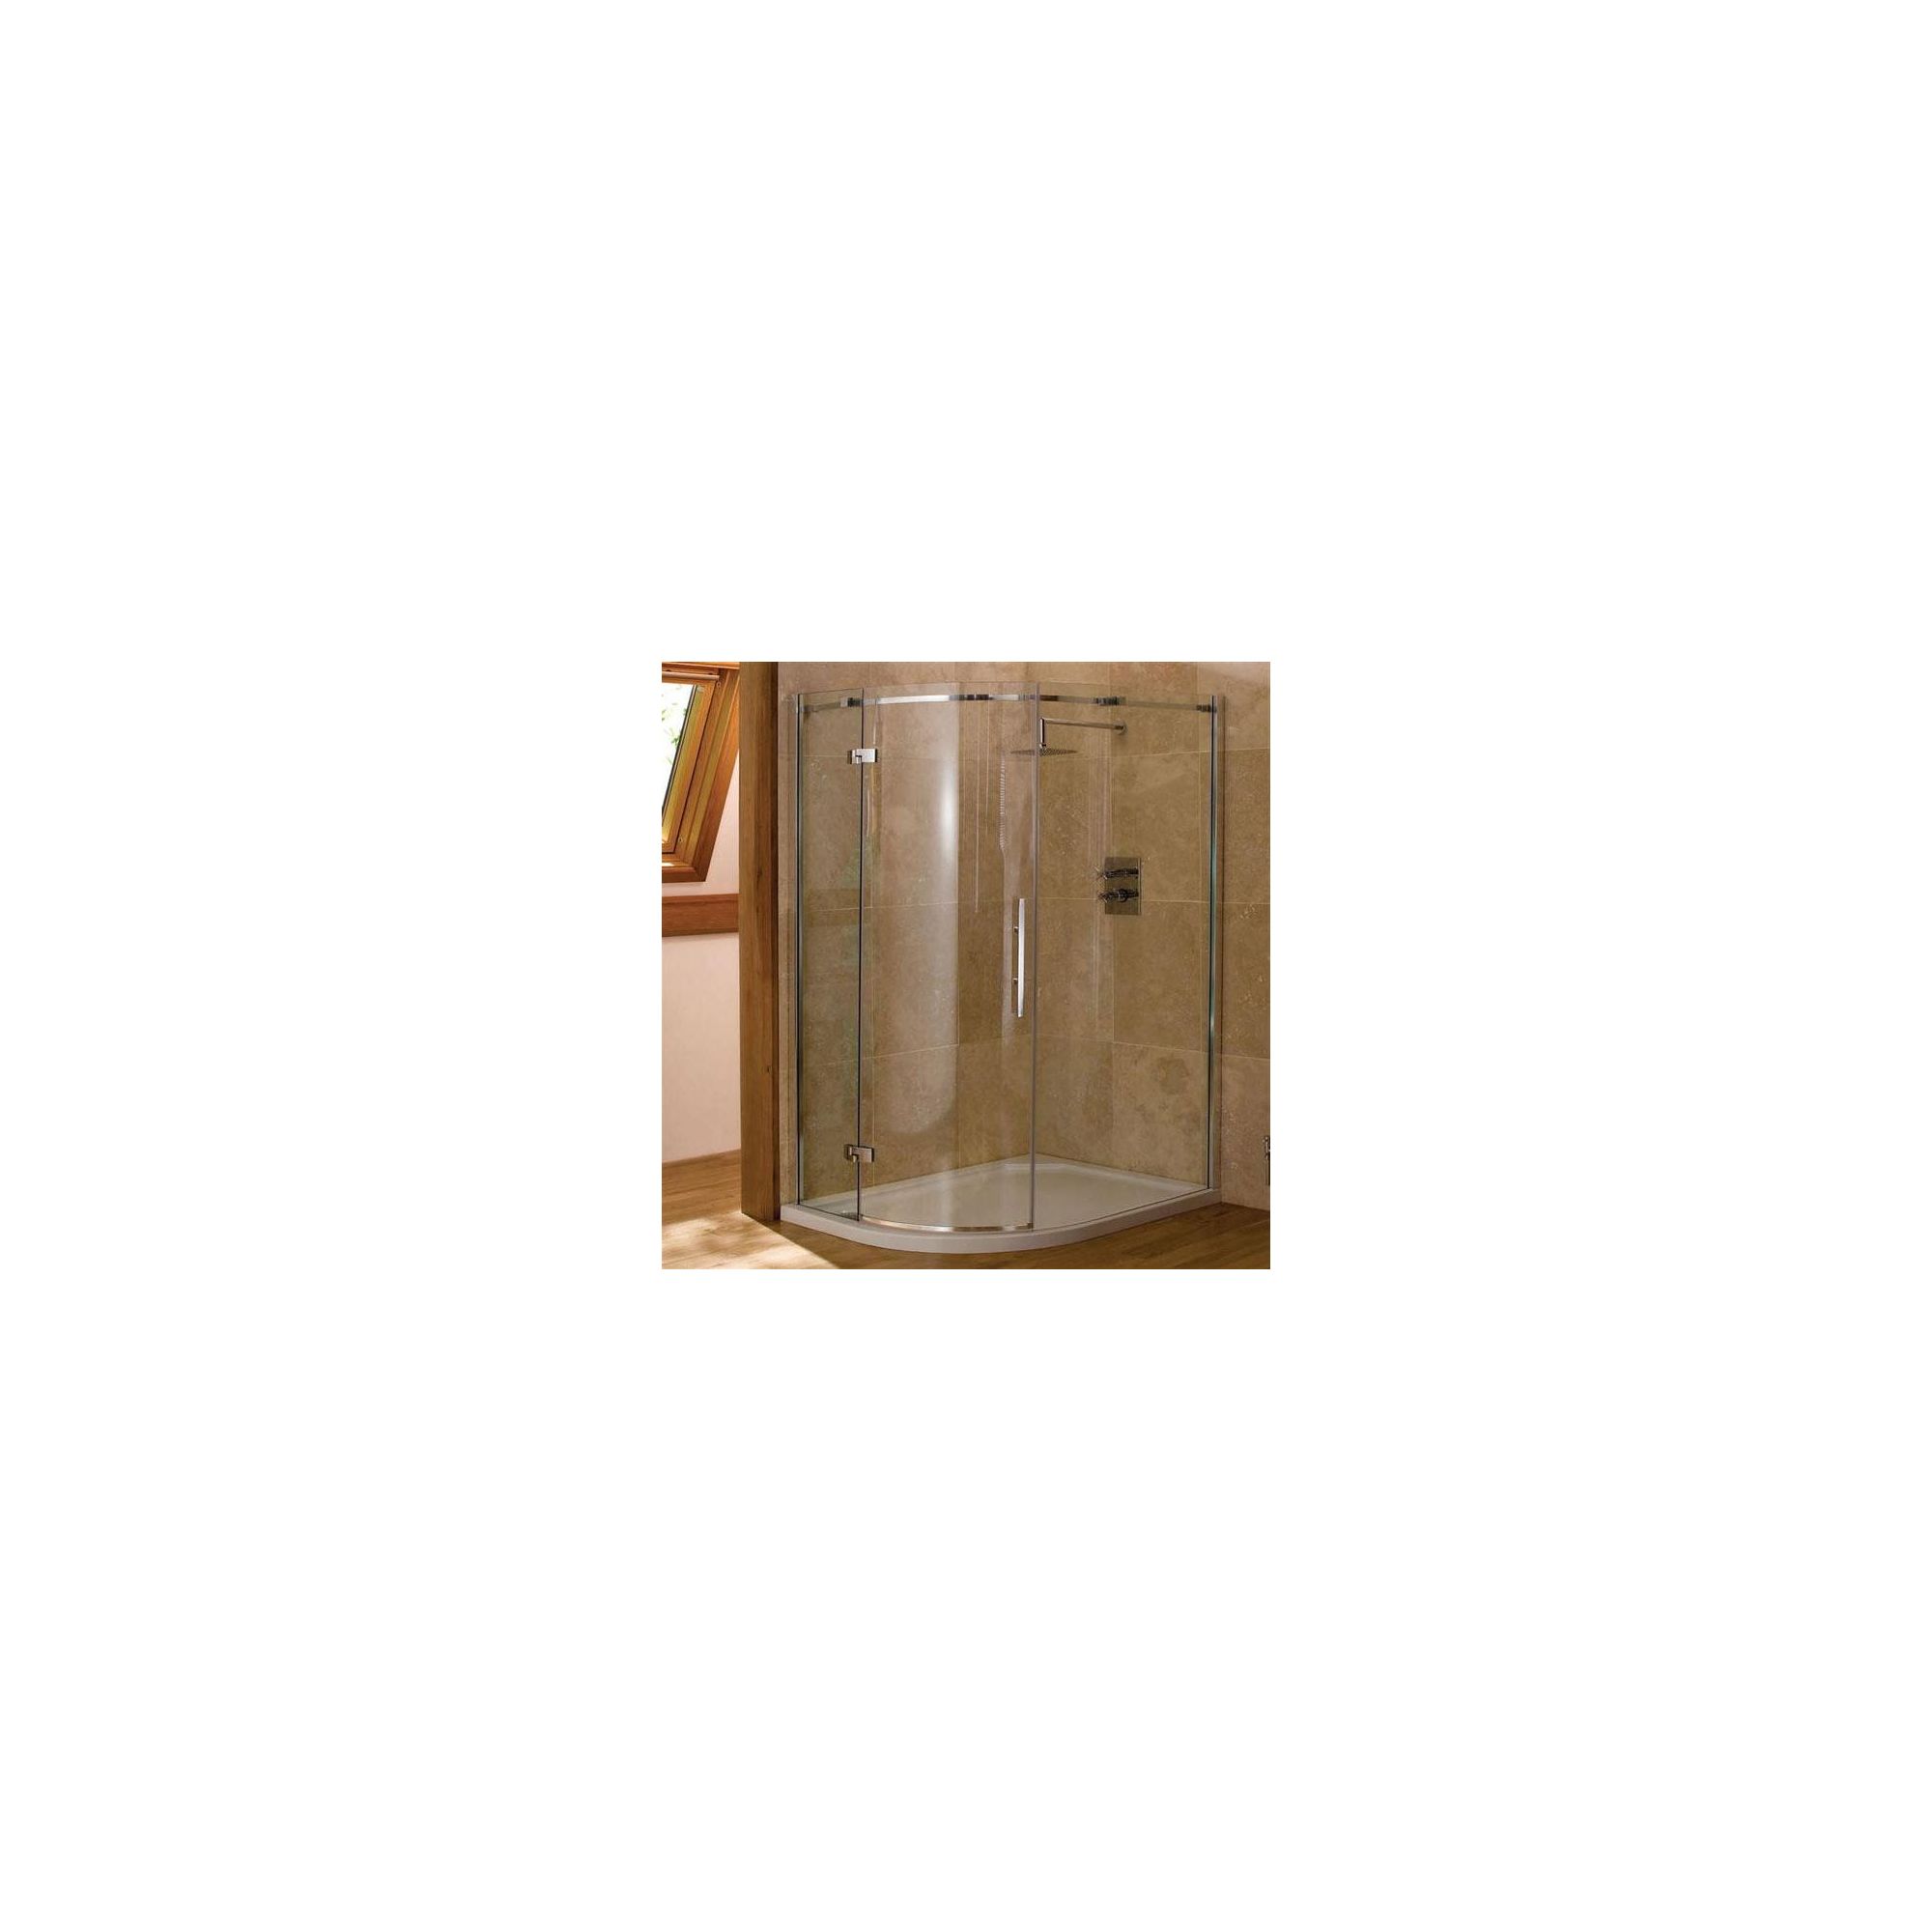 Merlyn Vivid Nine Offset Quadrant Shower Door, 1200mm x 900mm, Right Handed, 8mm Glass at Tesco Direct